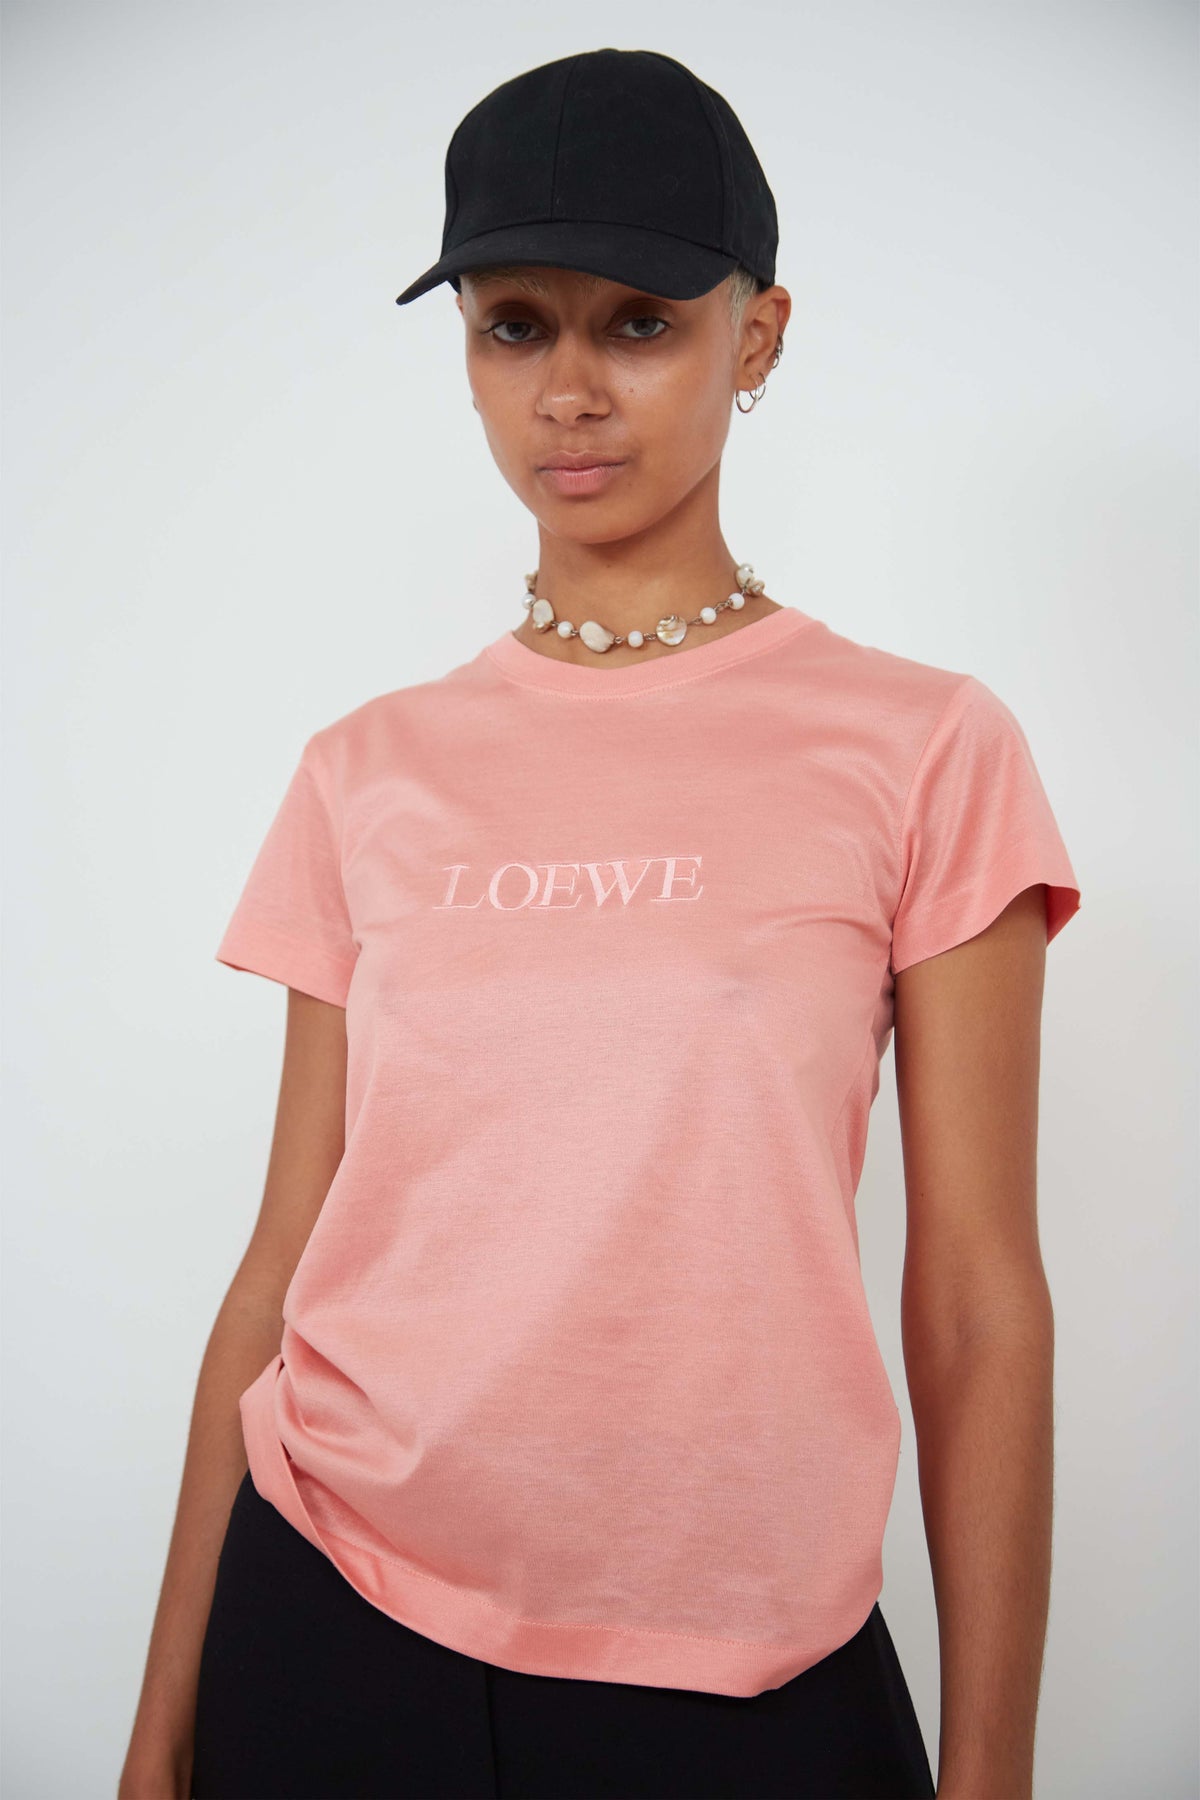 Loewe t-shirt